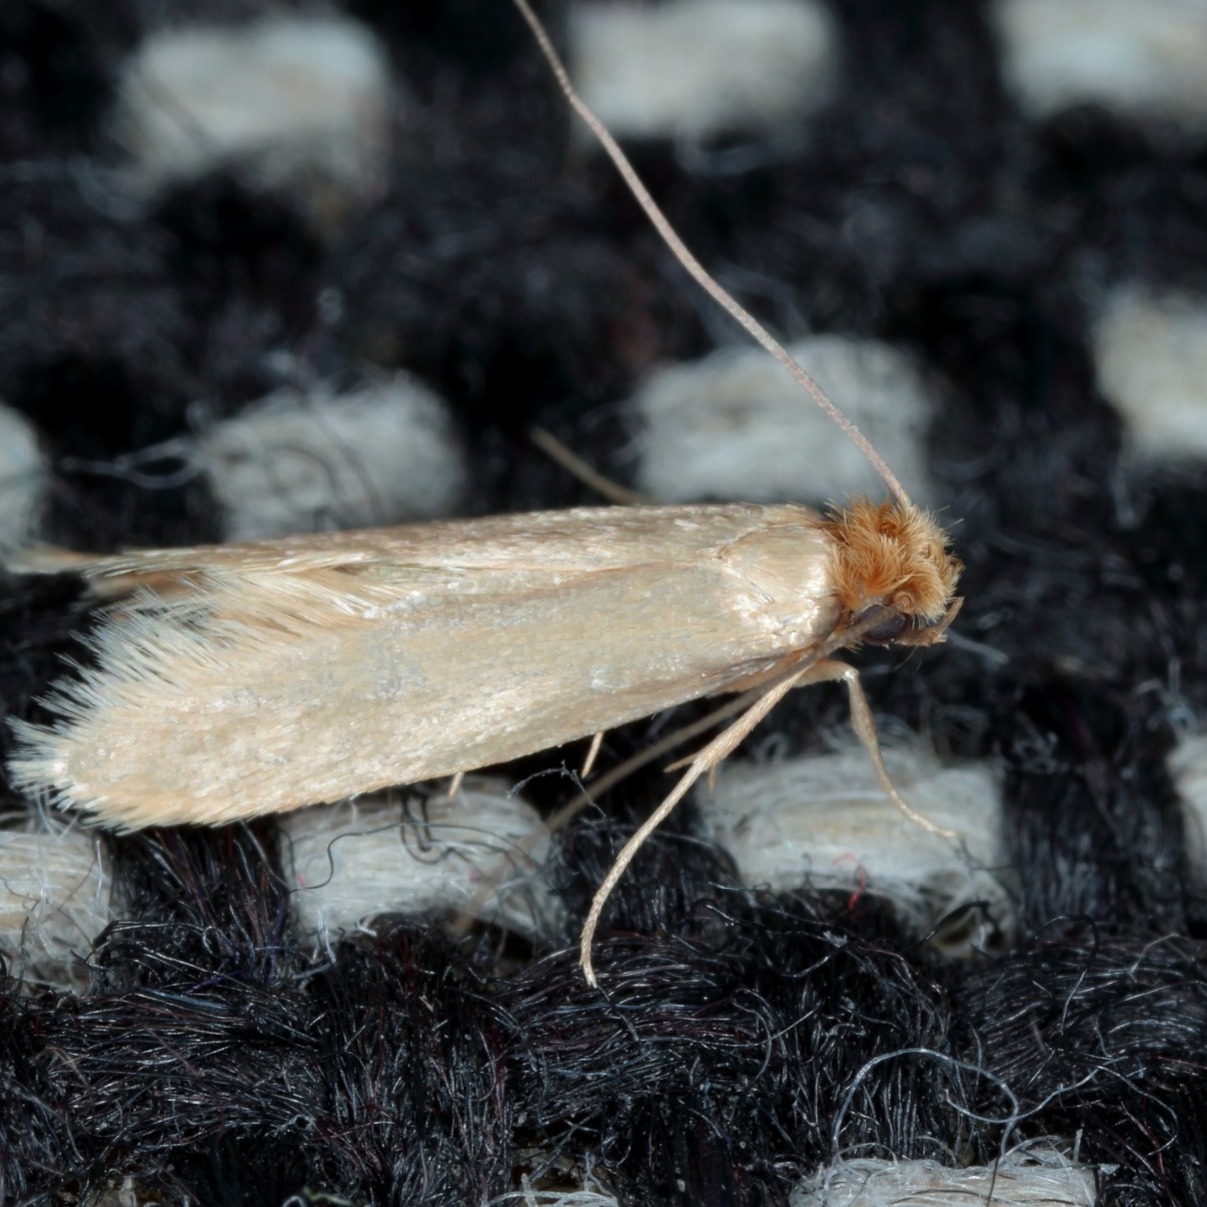 Adult clothes moth